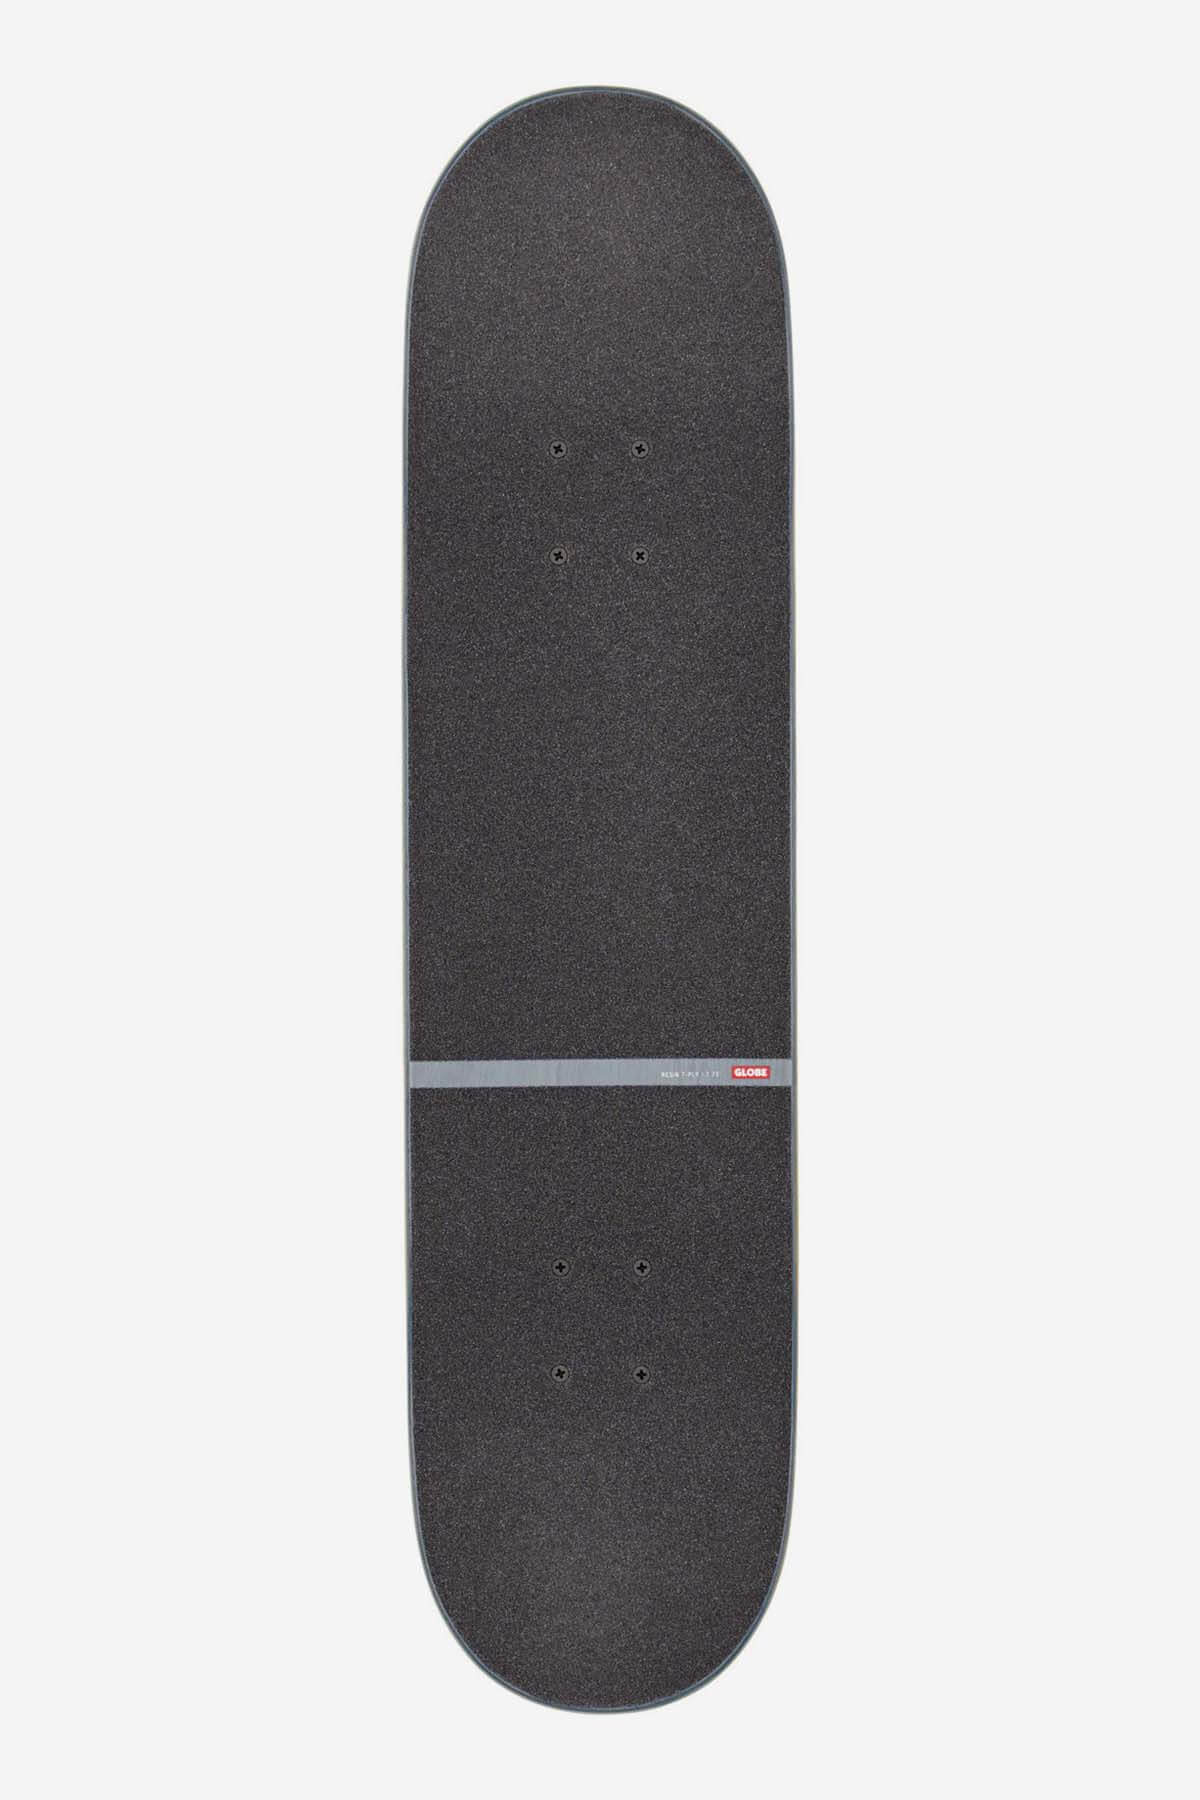 g1 d stack- blue oranje 7,75" compleet skateboard